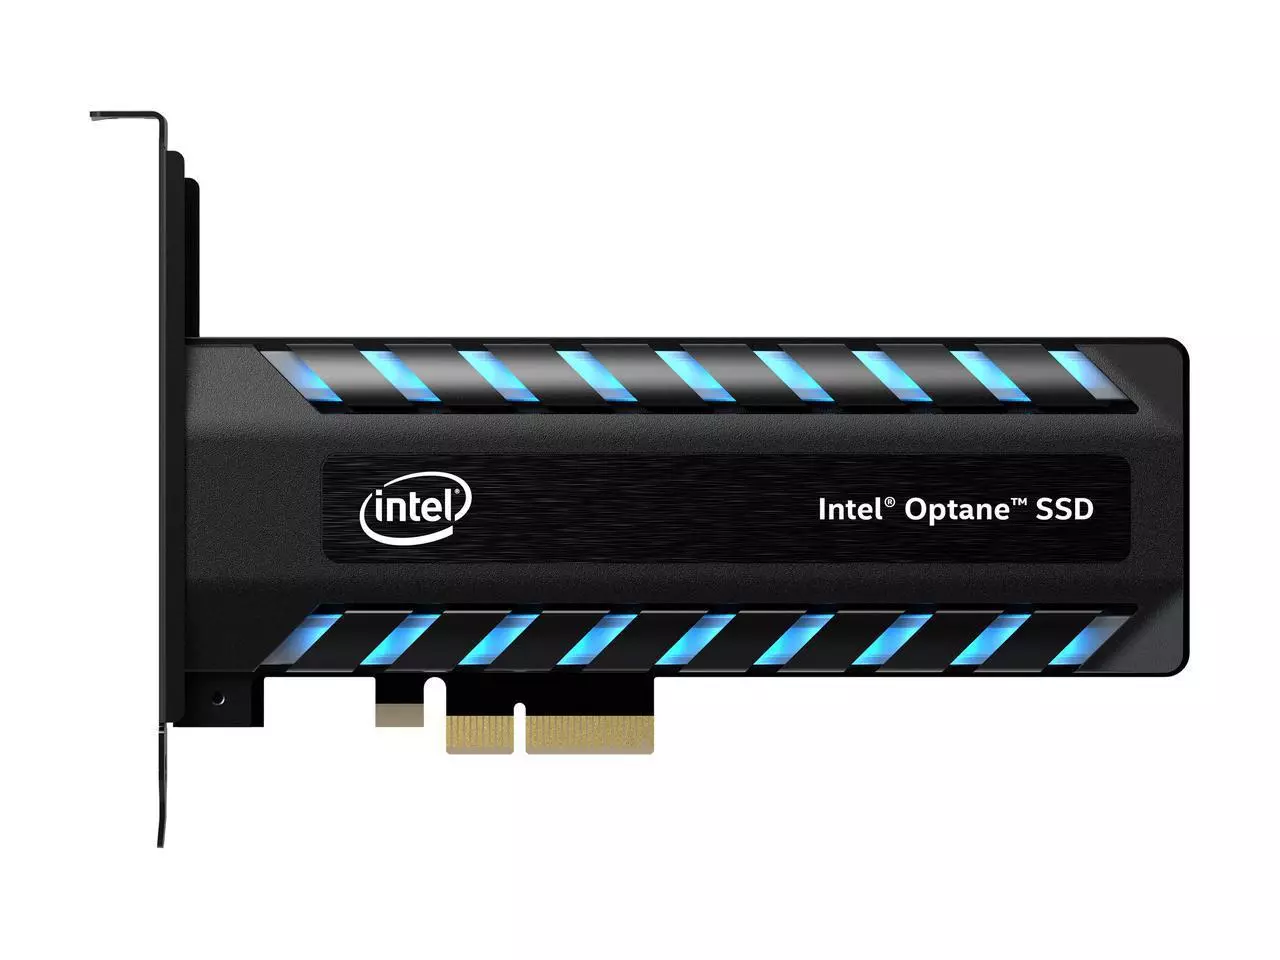  Intel Optane SSD 905P Merek SSD Terbaik